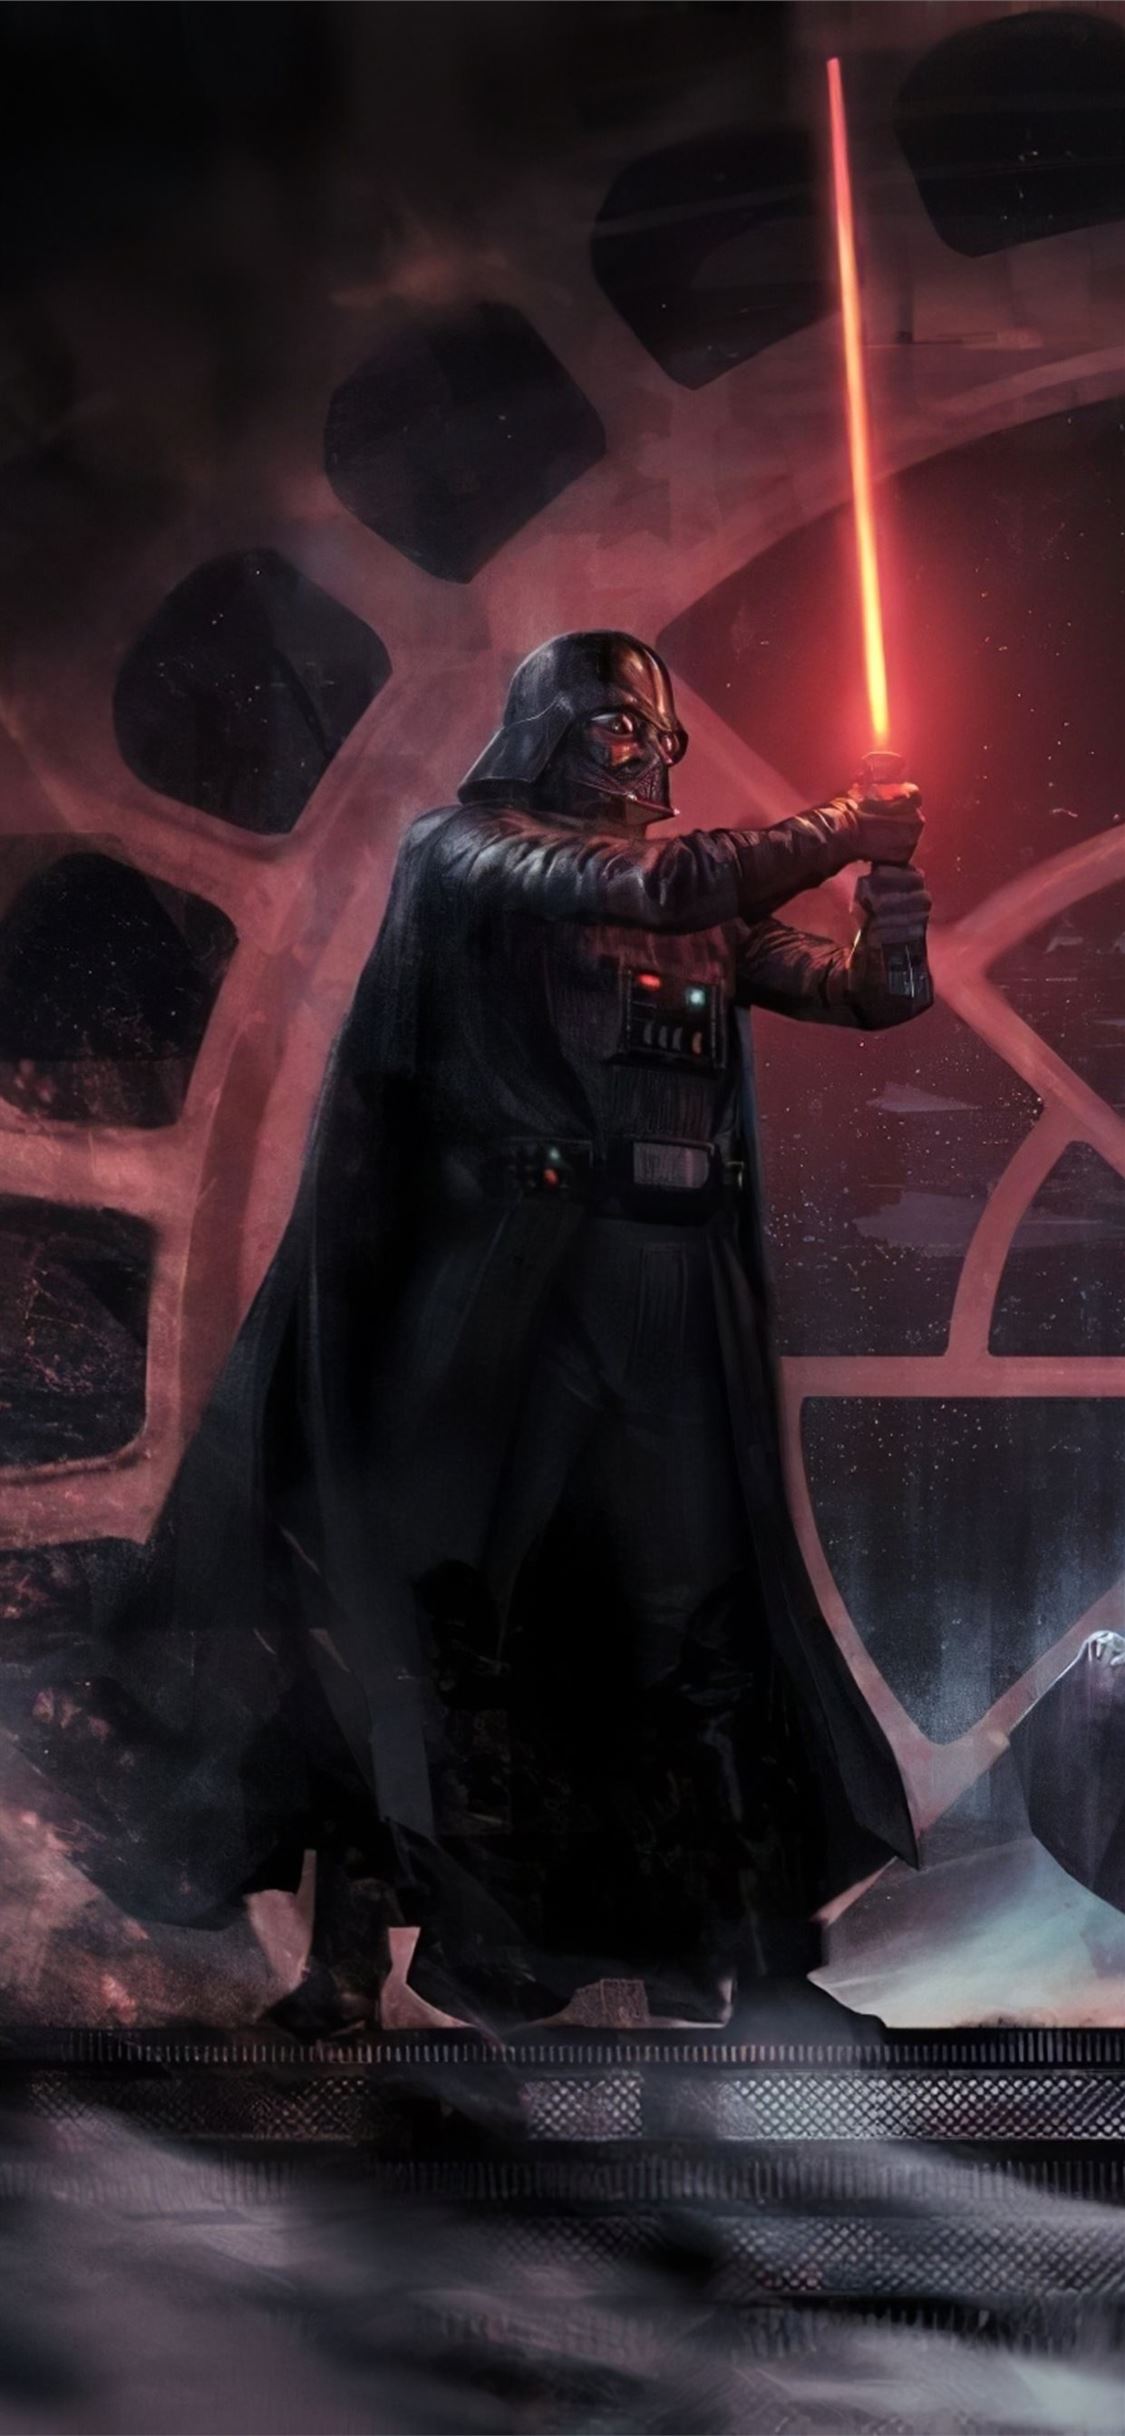 Darth Vader Vs Luke Skywalker Iphone X Wallpapers Free Download